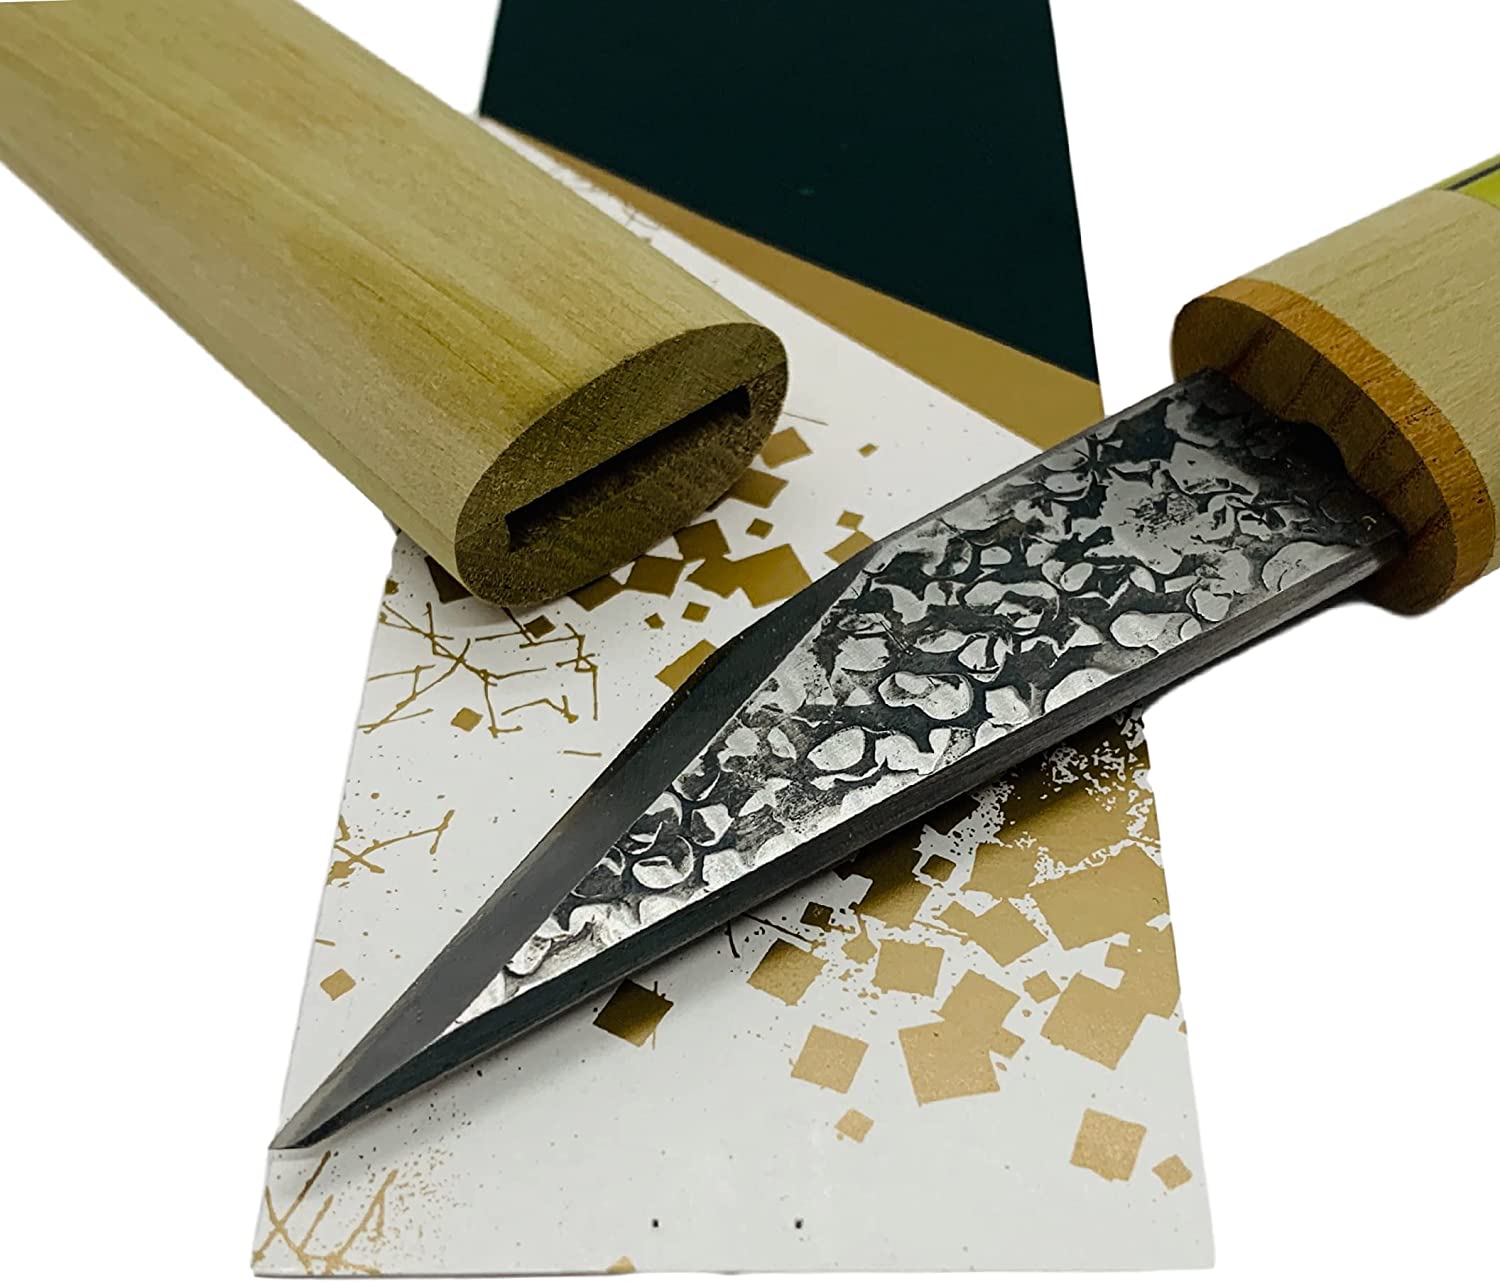 A textured kiridashi knife I made, I've been getting into k…